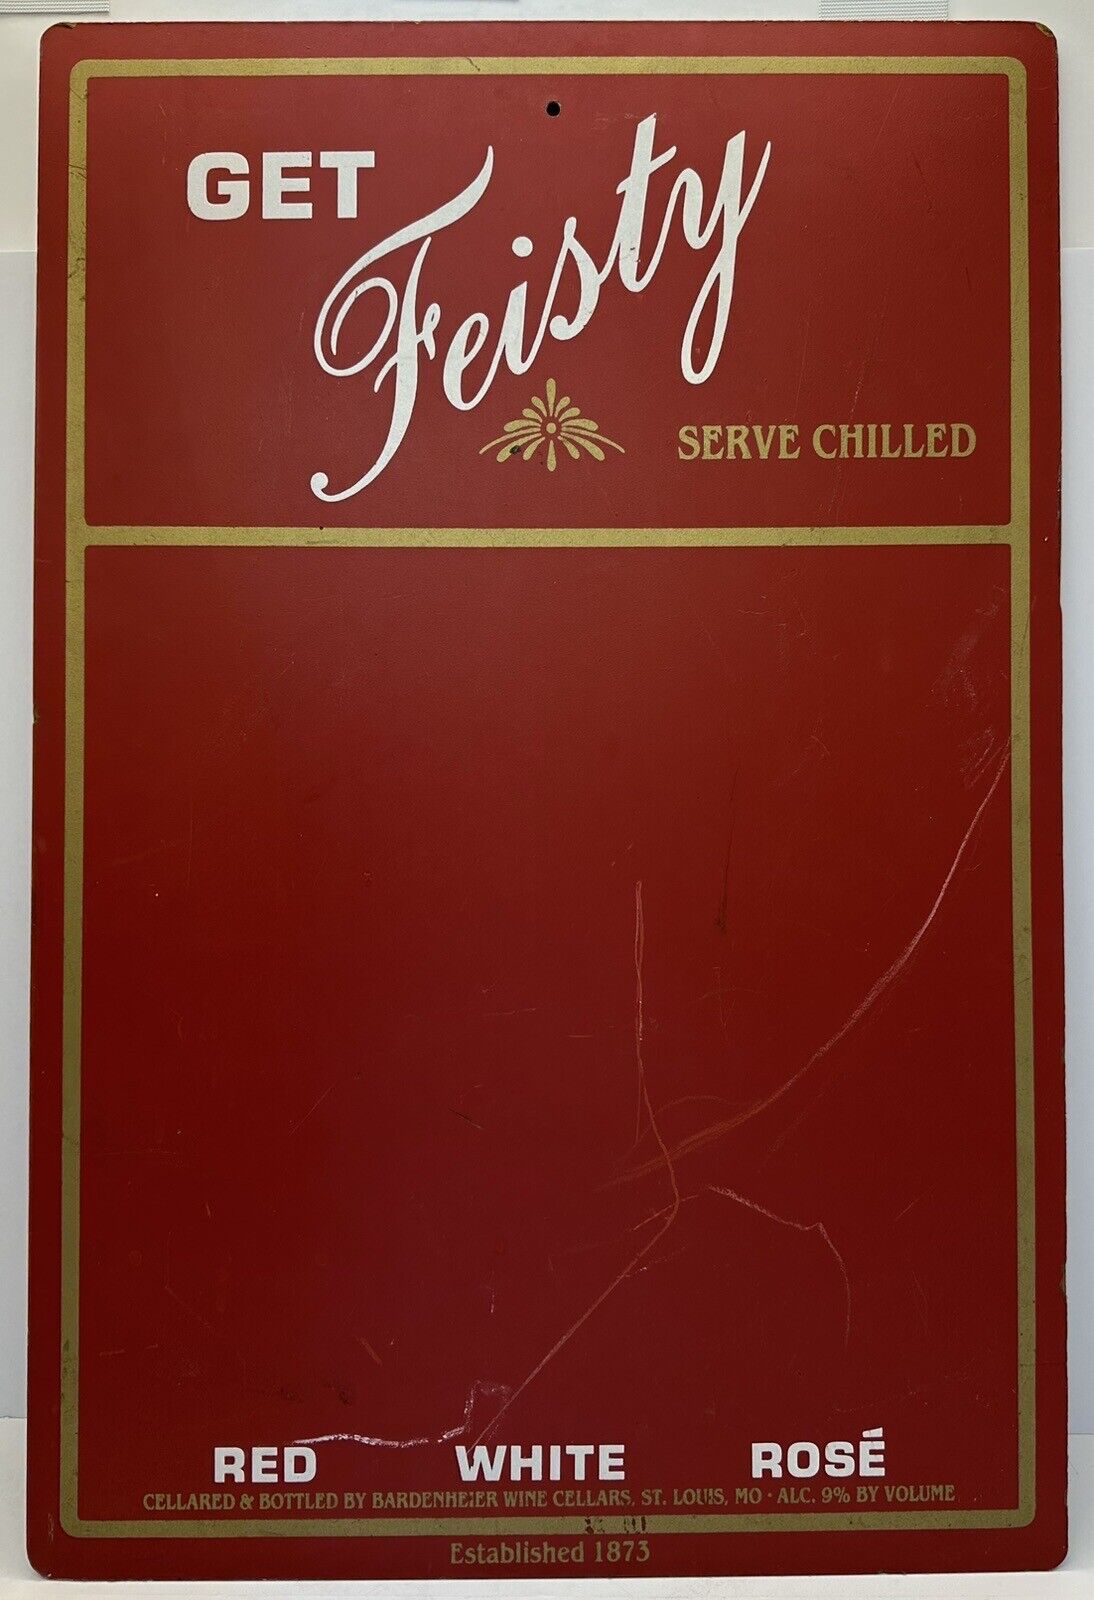 Vintage Get Feisty Serve Chilled Sign Bardenheier Wine Cellar 24x16”